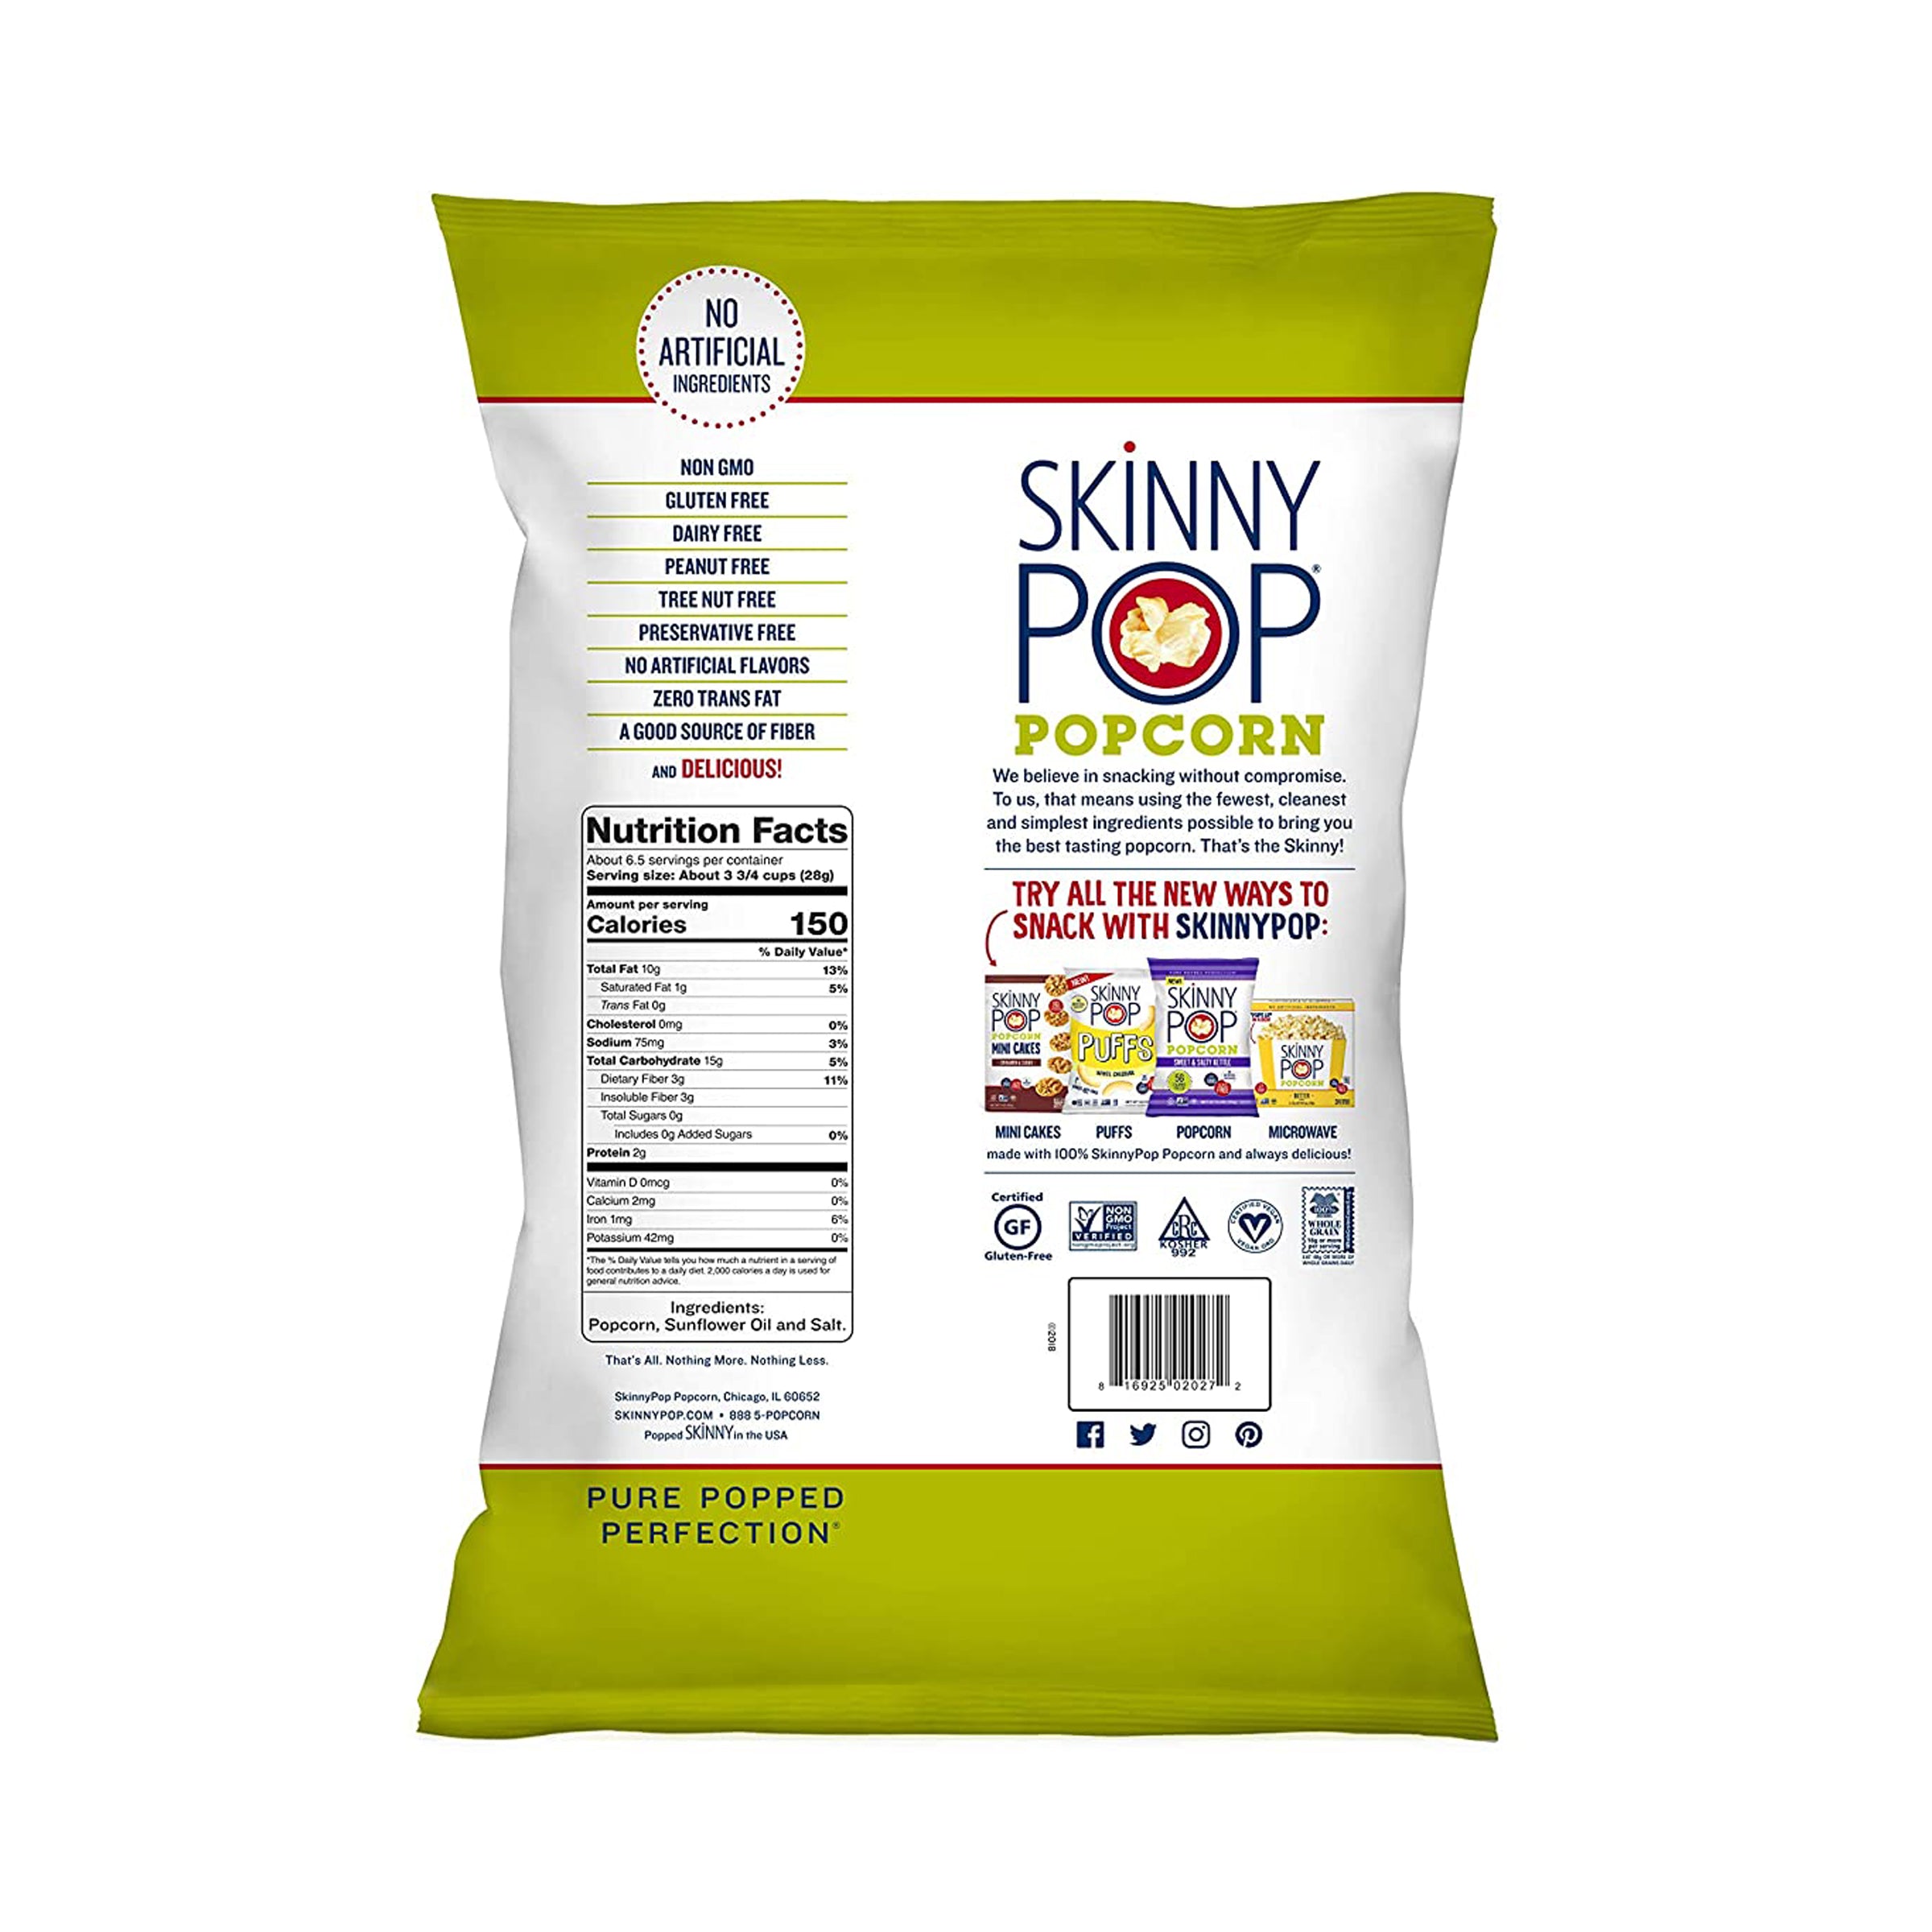 Skinny Pop White Cheddar Flavor Popcorn Sharing Size, 6.7 oz